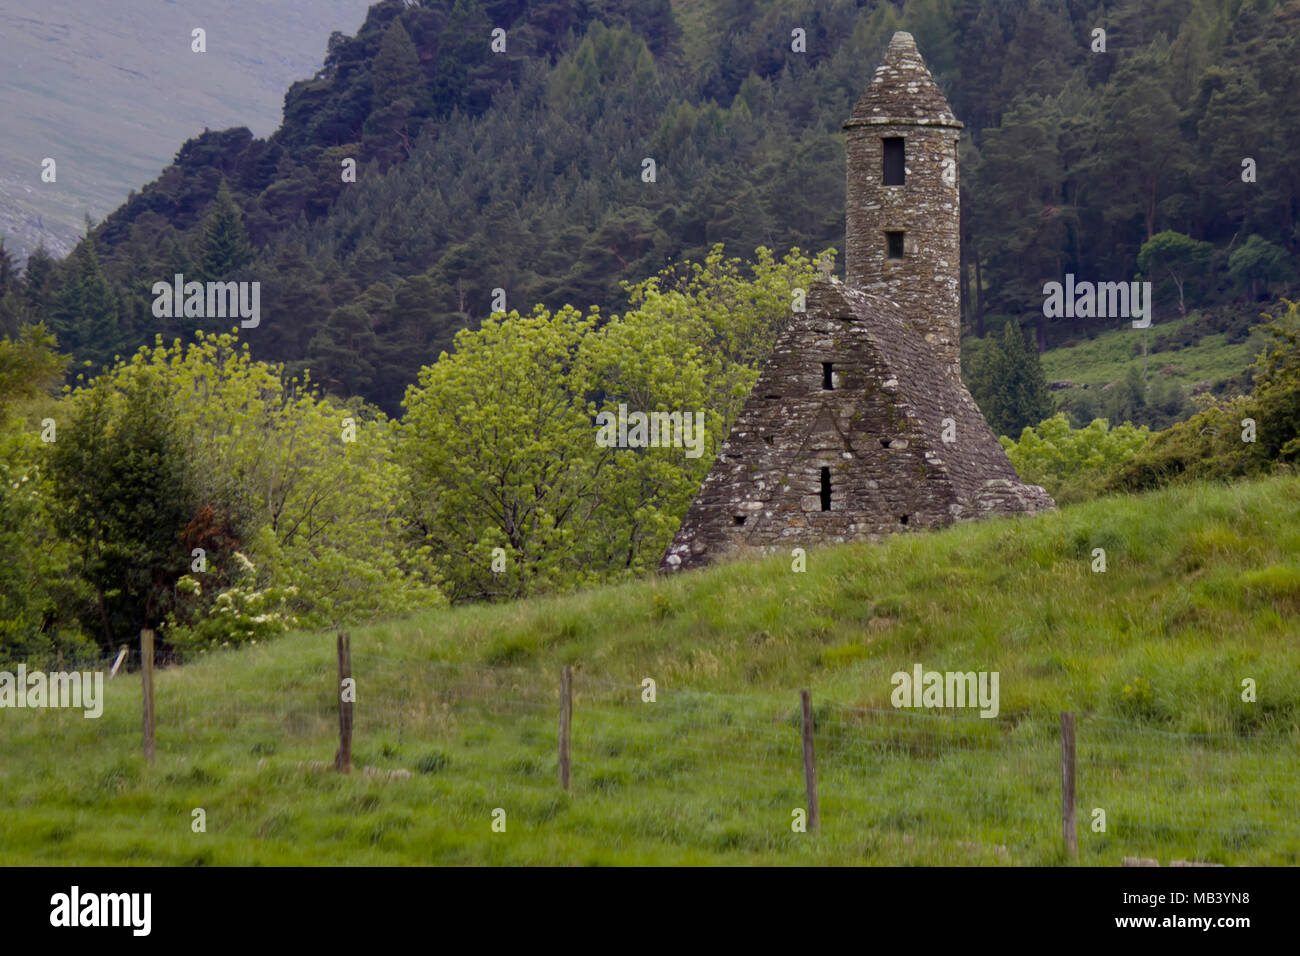 Toursit site in Ireland Stock Photo